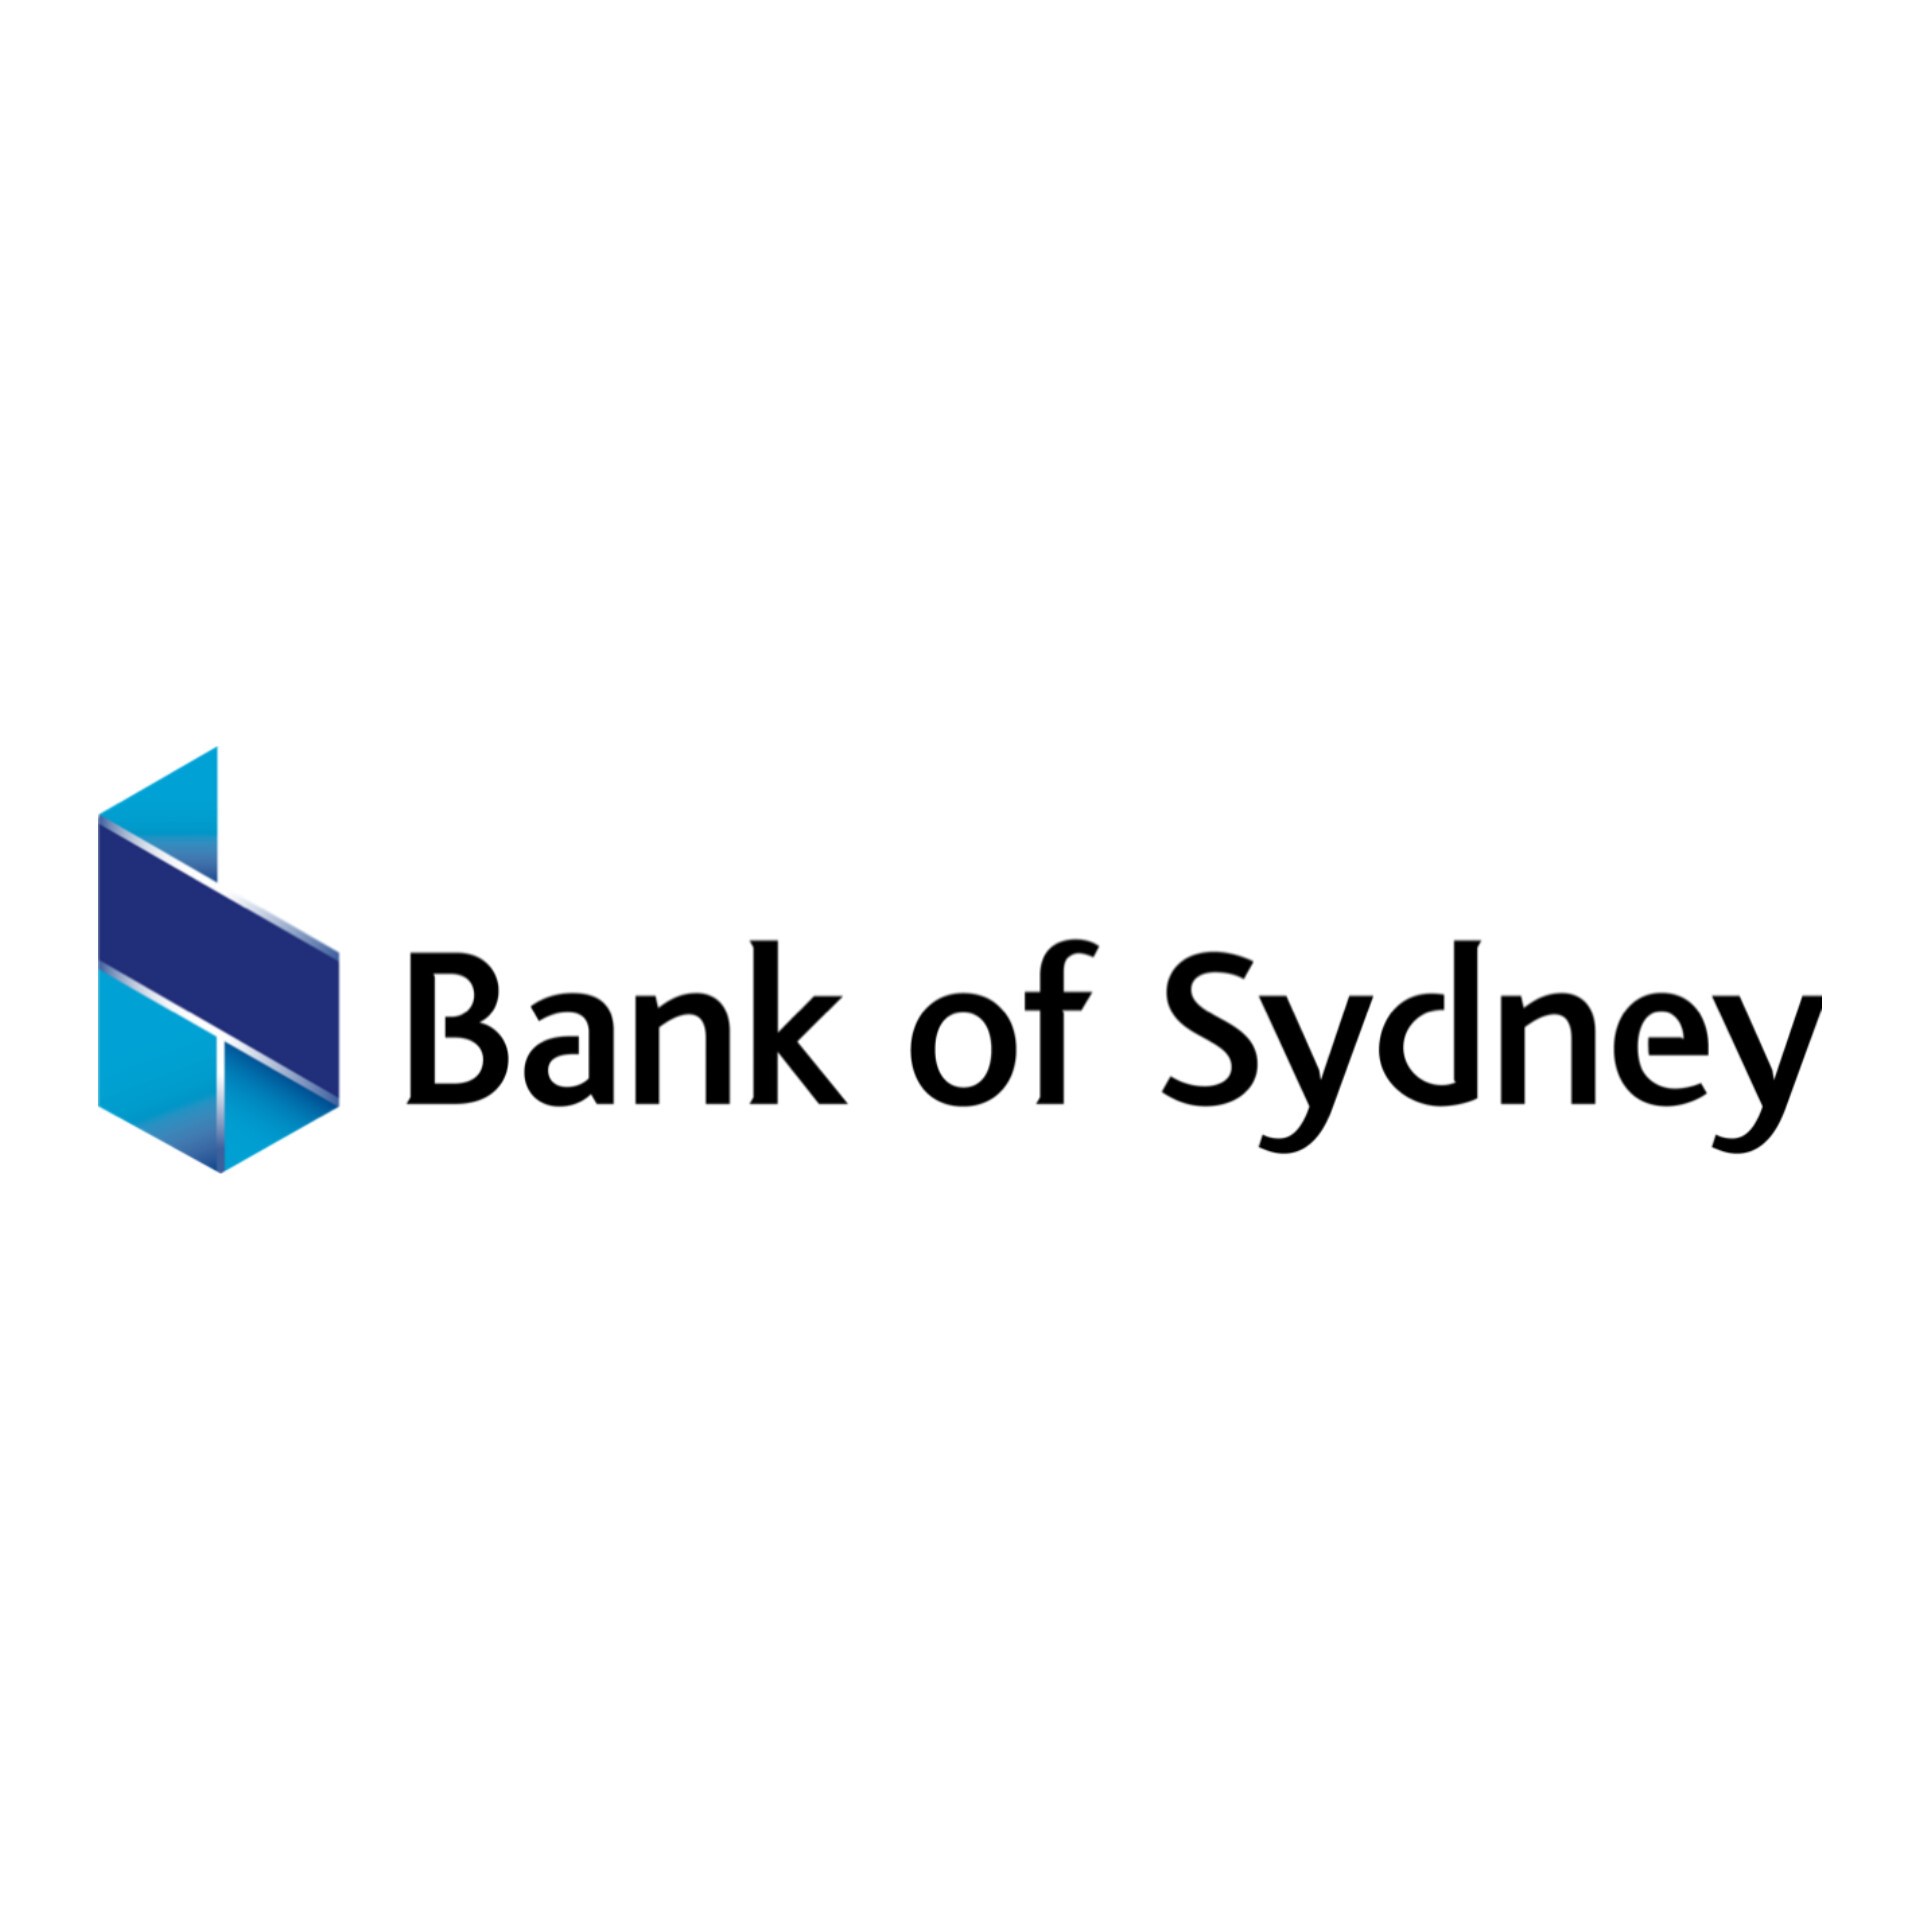 Bank of Sydney